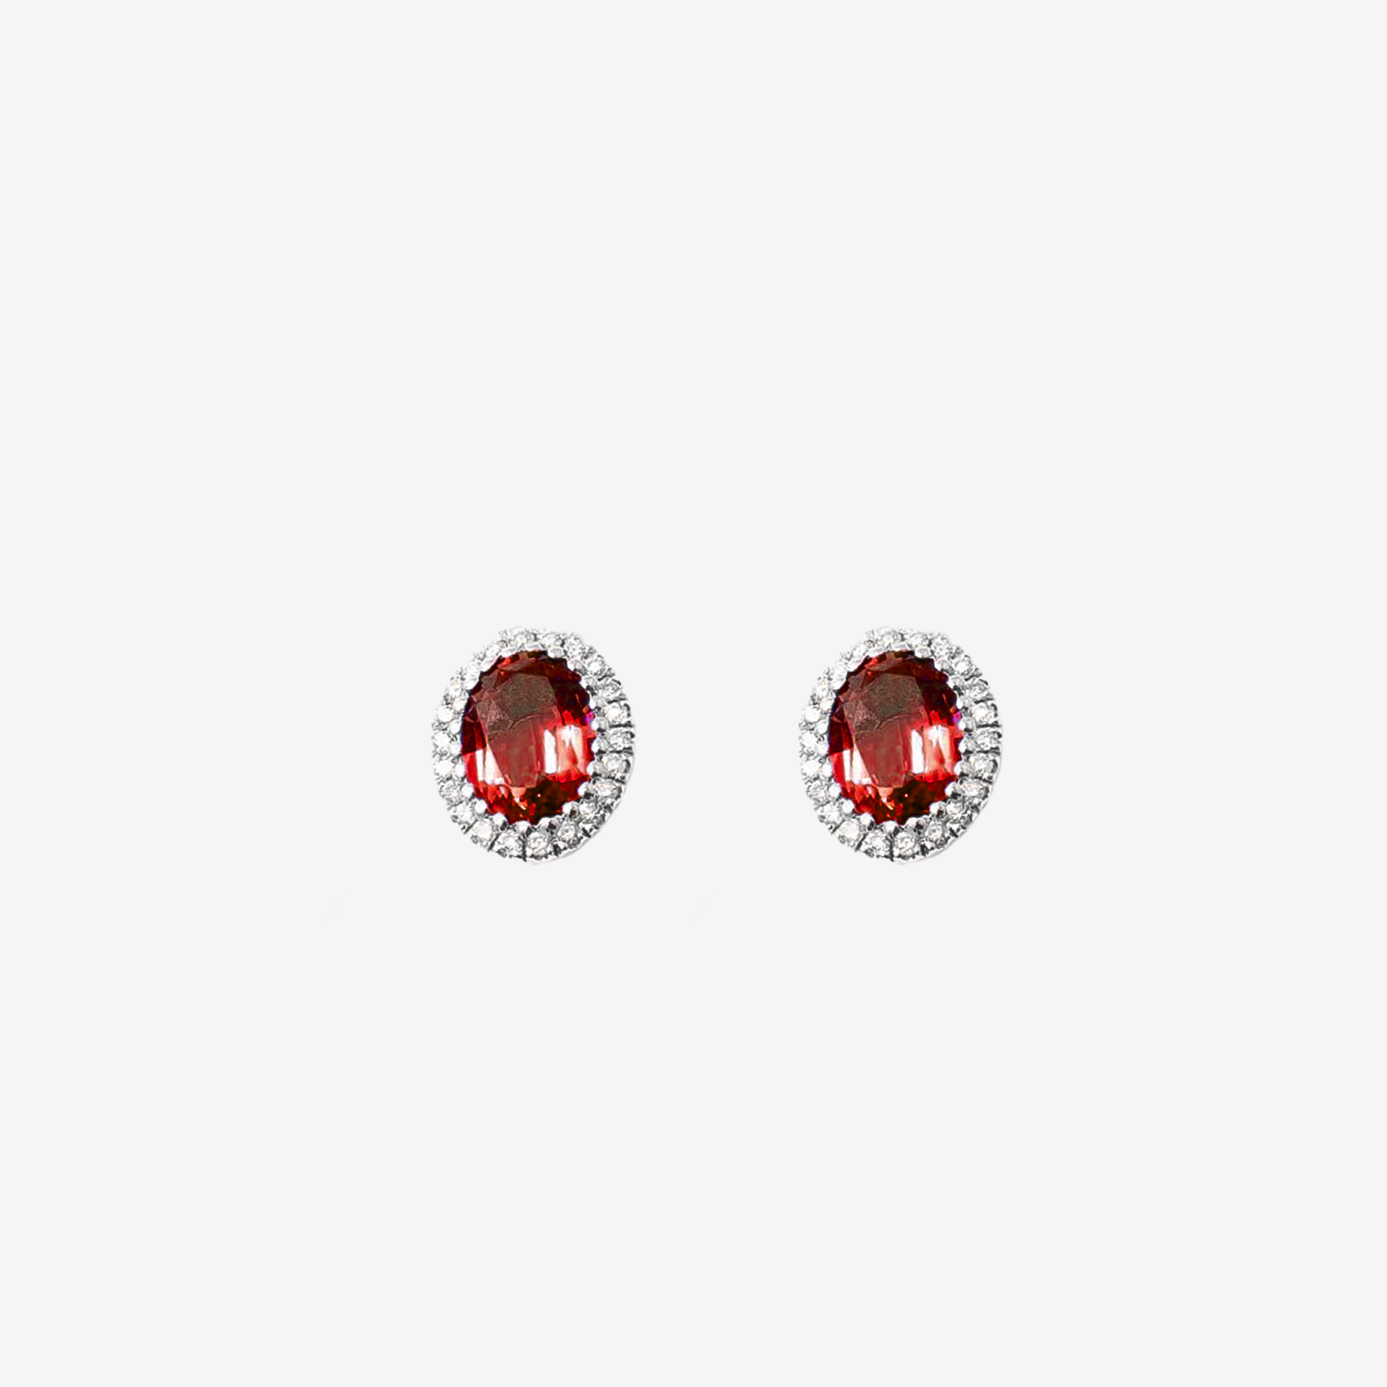 Earrings with rubies and diamonds